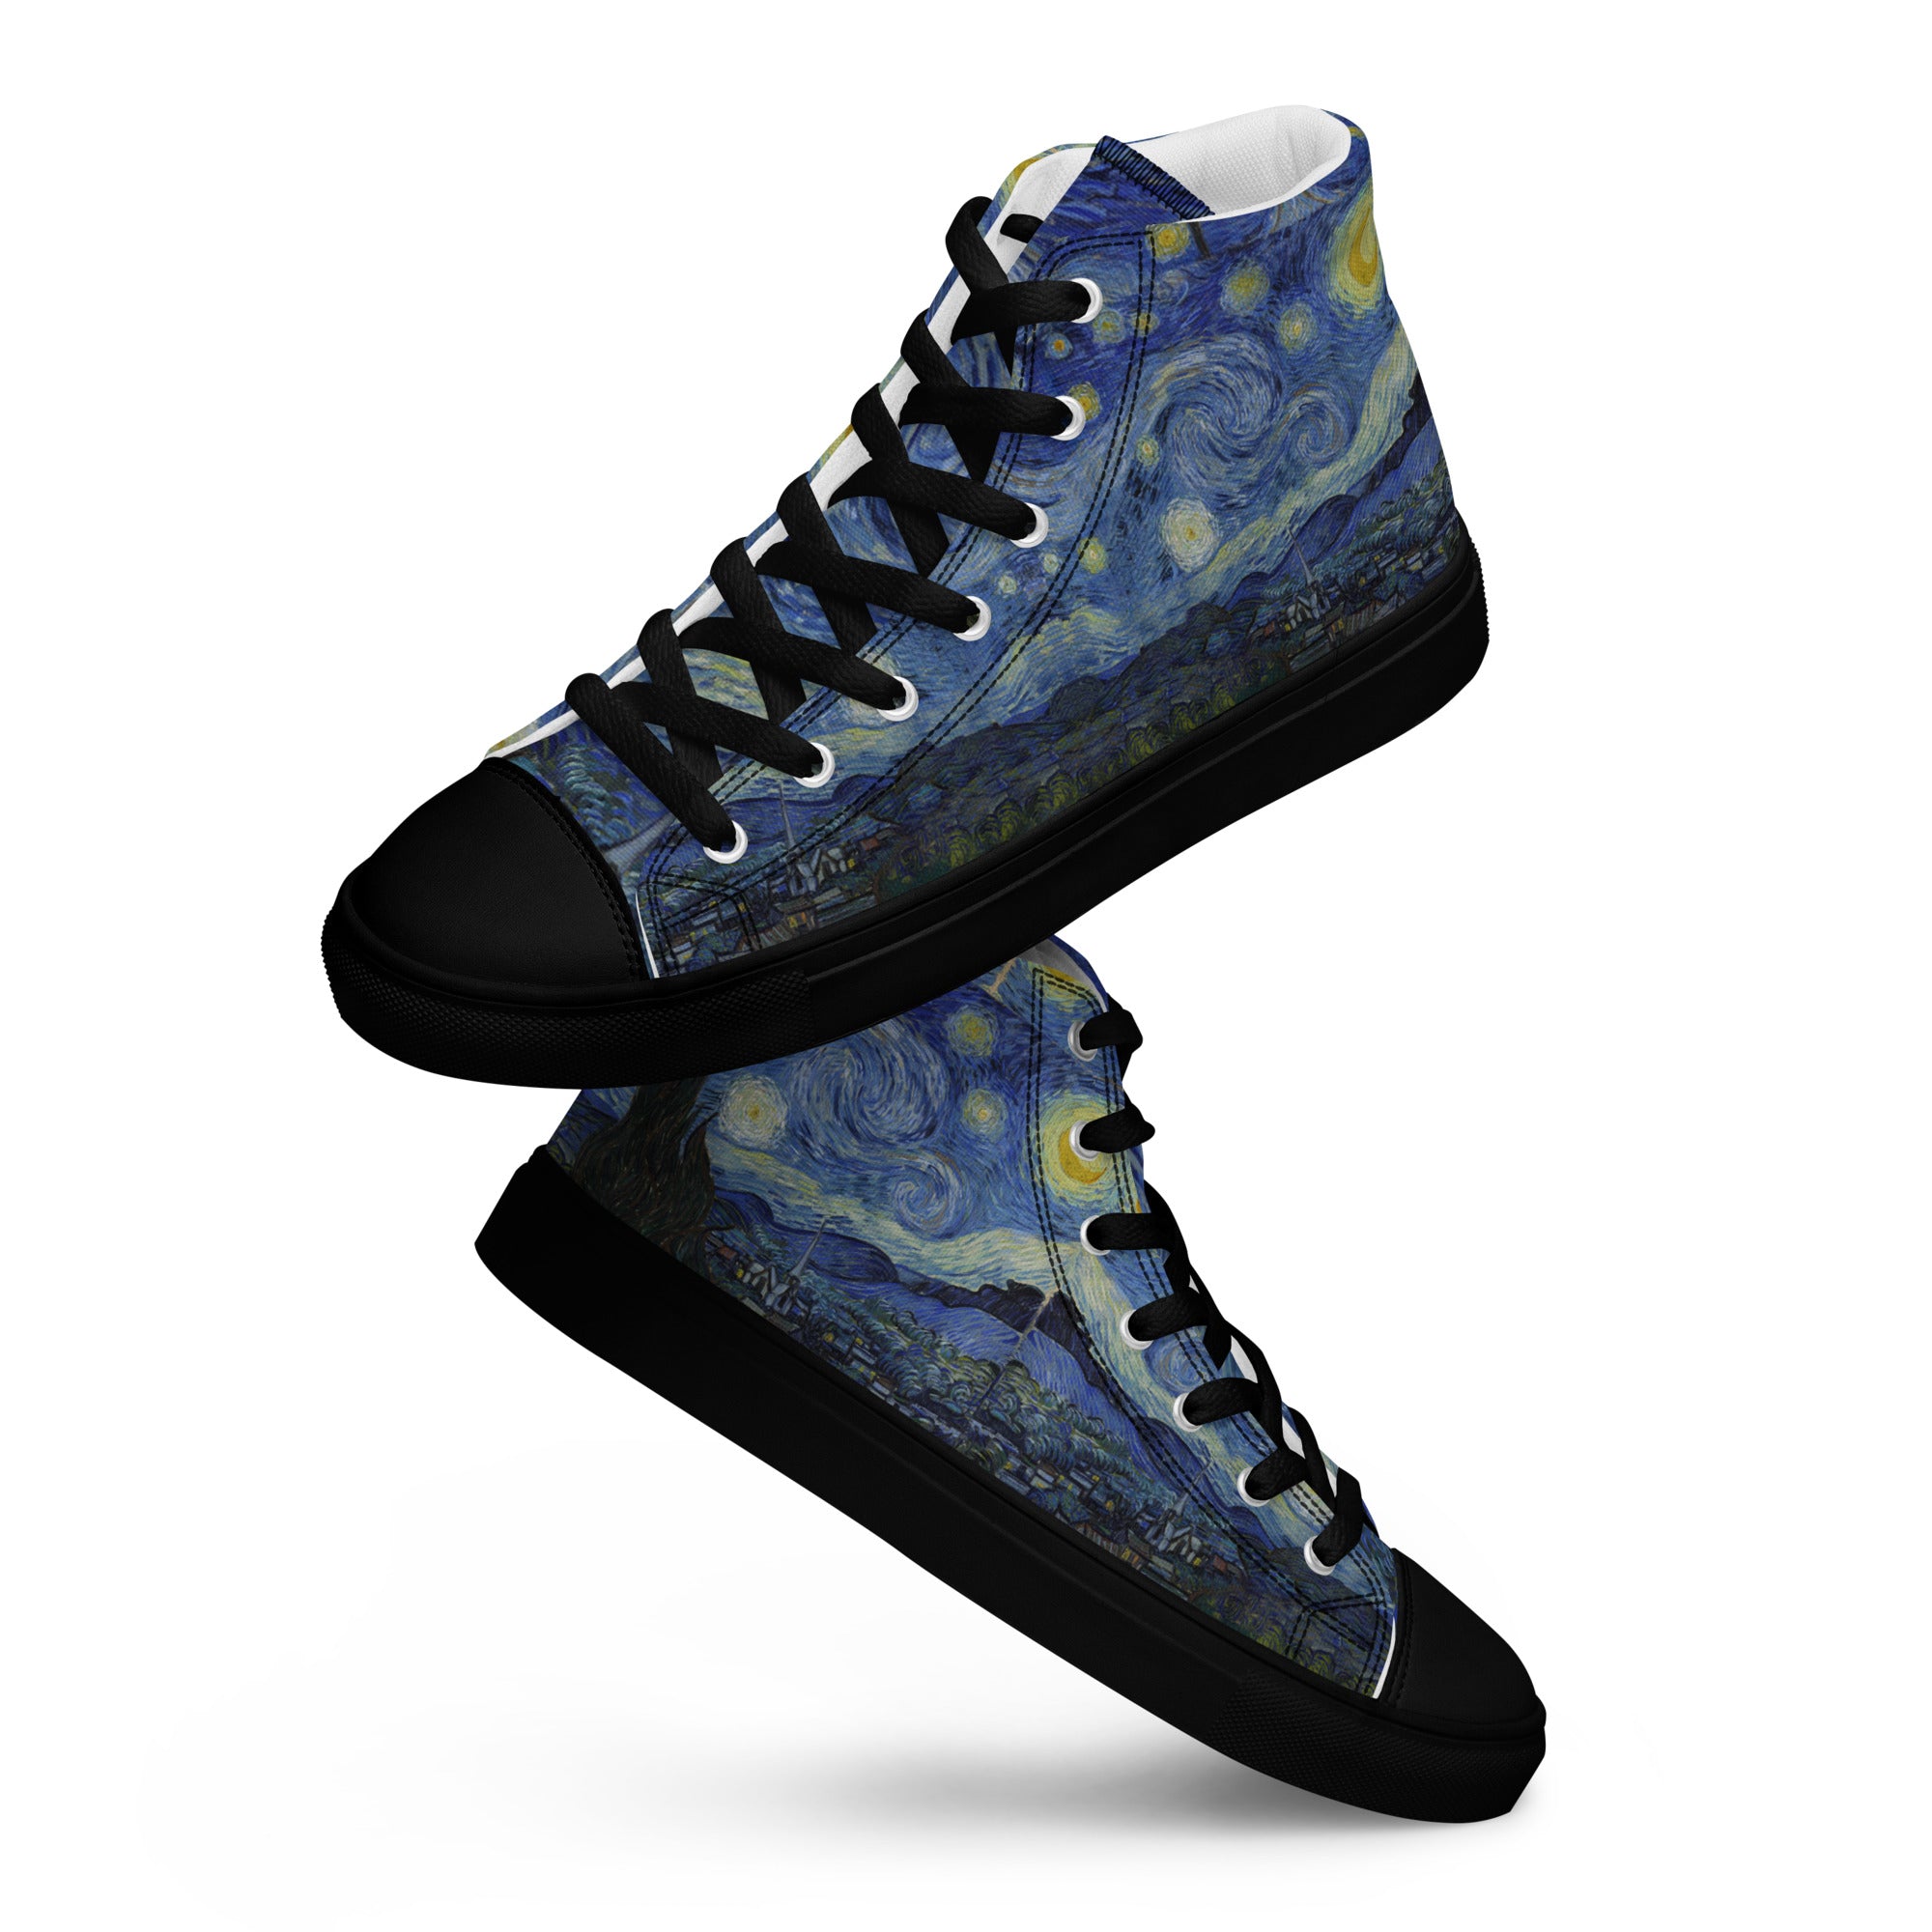 Vincent van Gogh 'Starry Night' High Top Shoes | Premium Art High Top Sneakers for Men